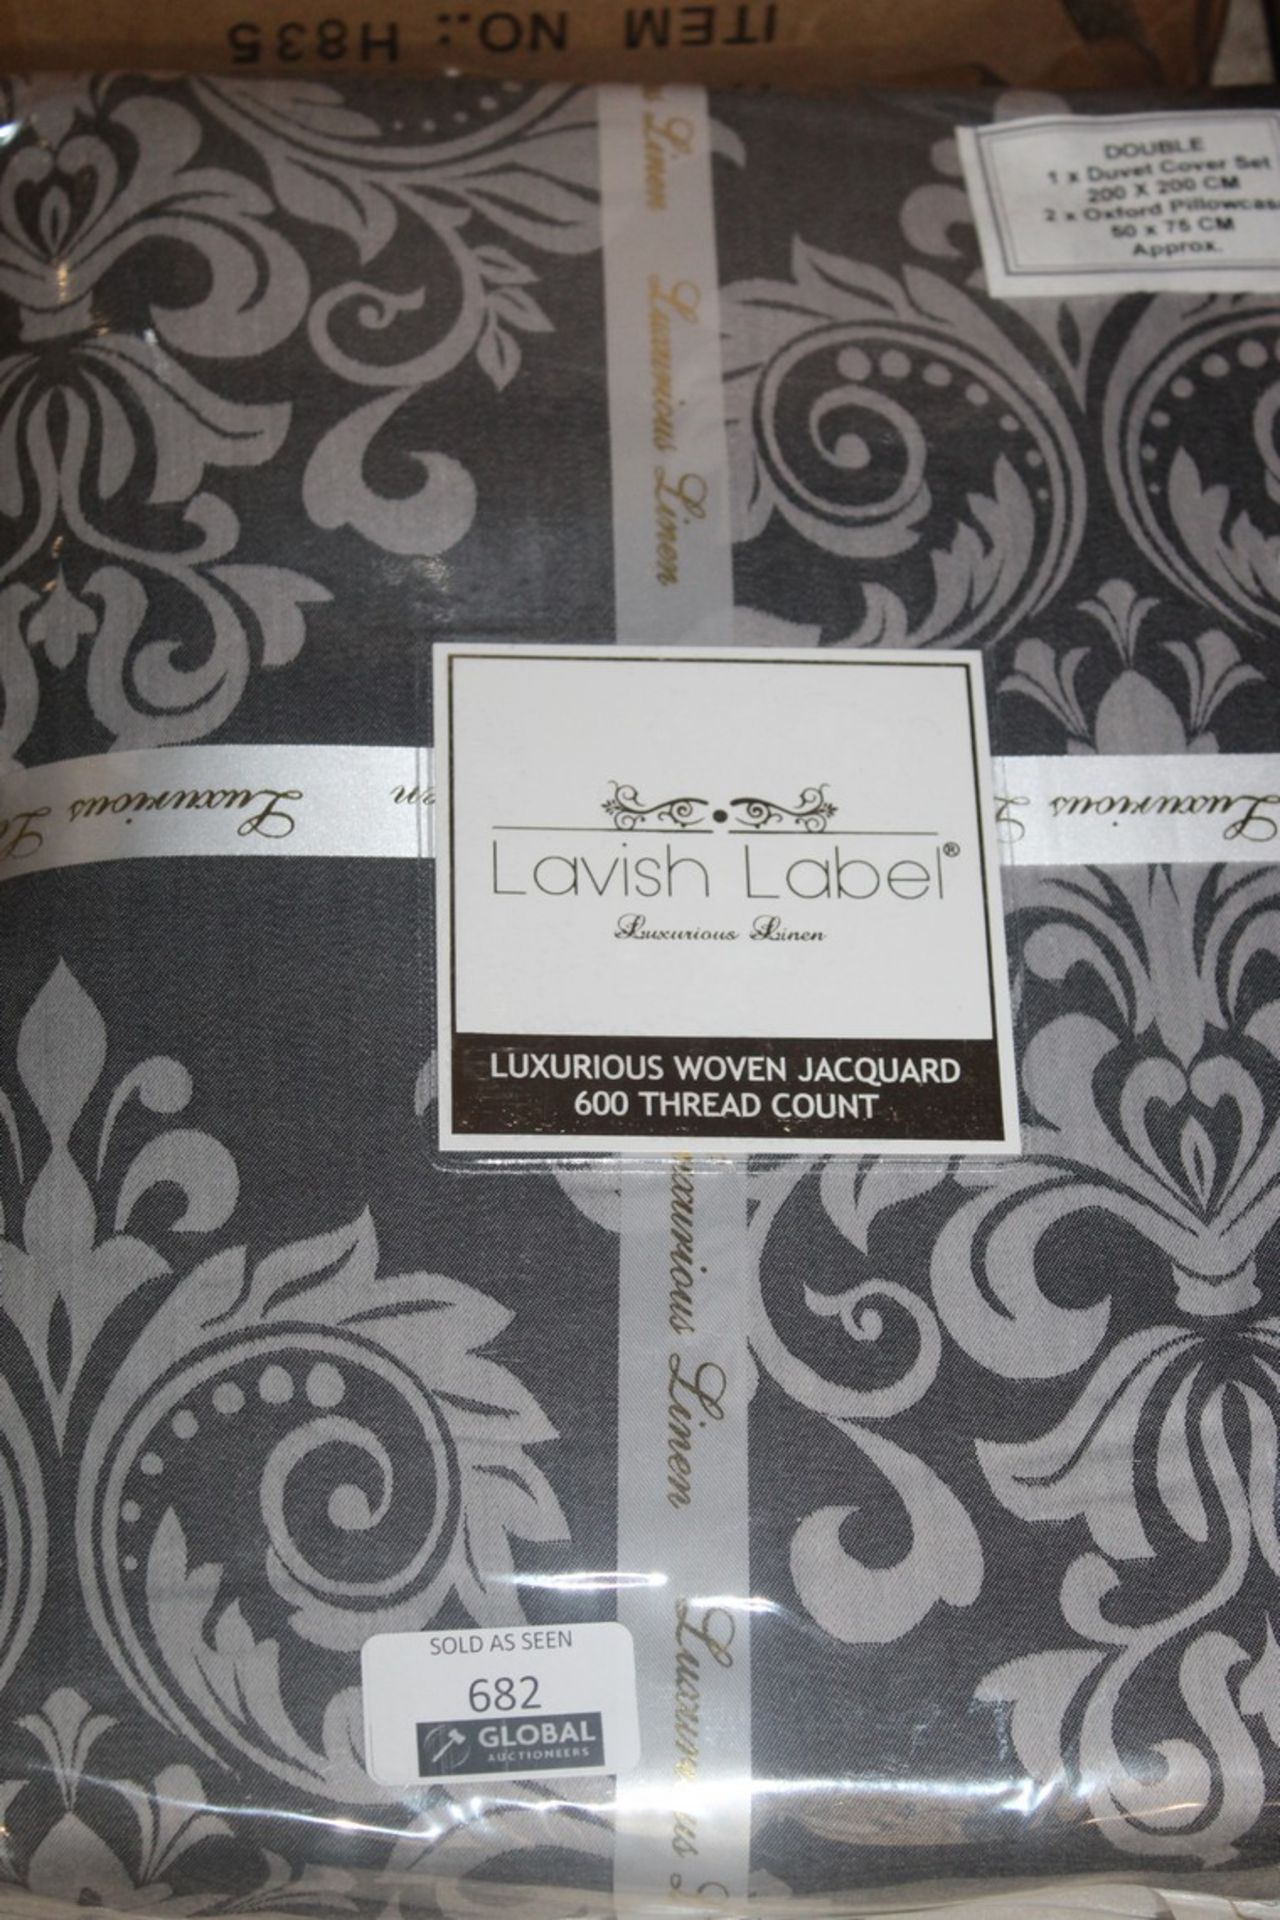 Lavish Label Double Luxurious Woven Jaquard 600 Thread Count Duvet Cover Set RRP £50 (Appraisals Are